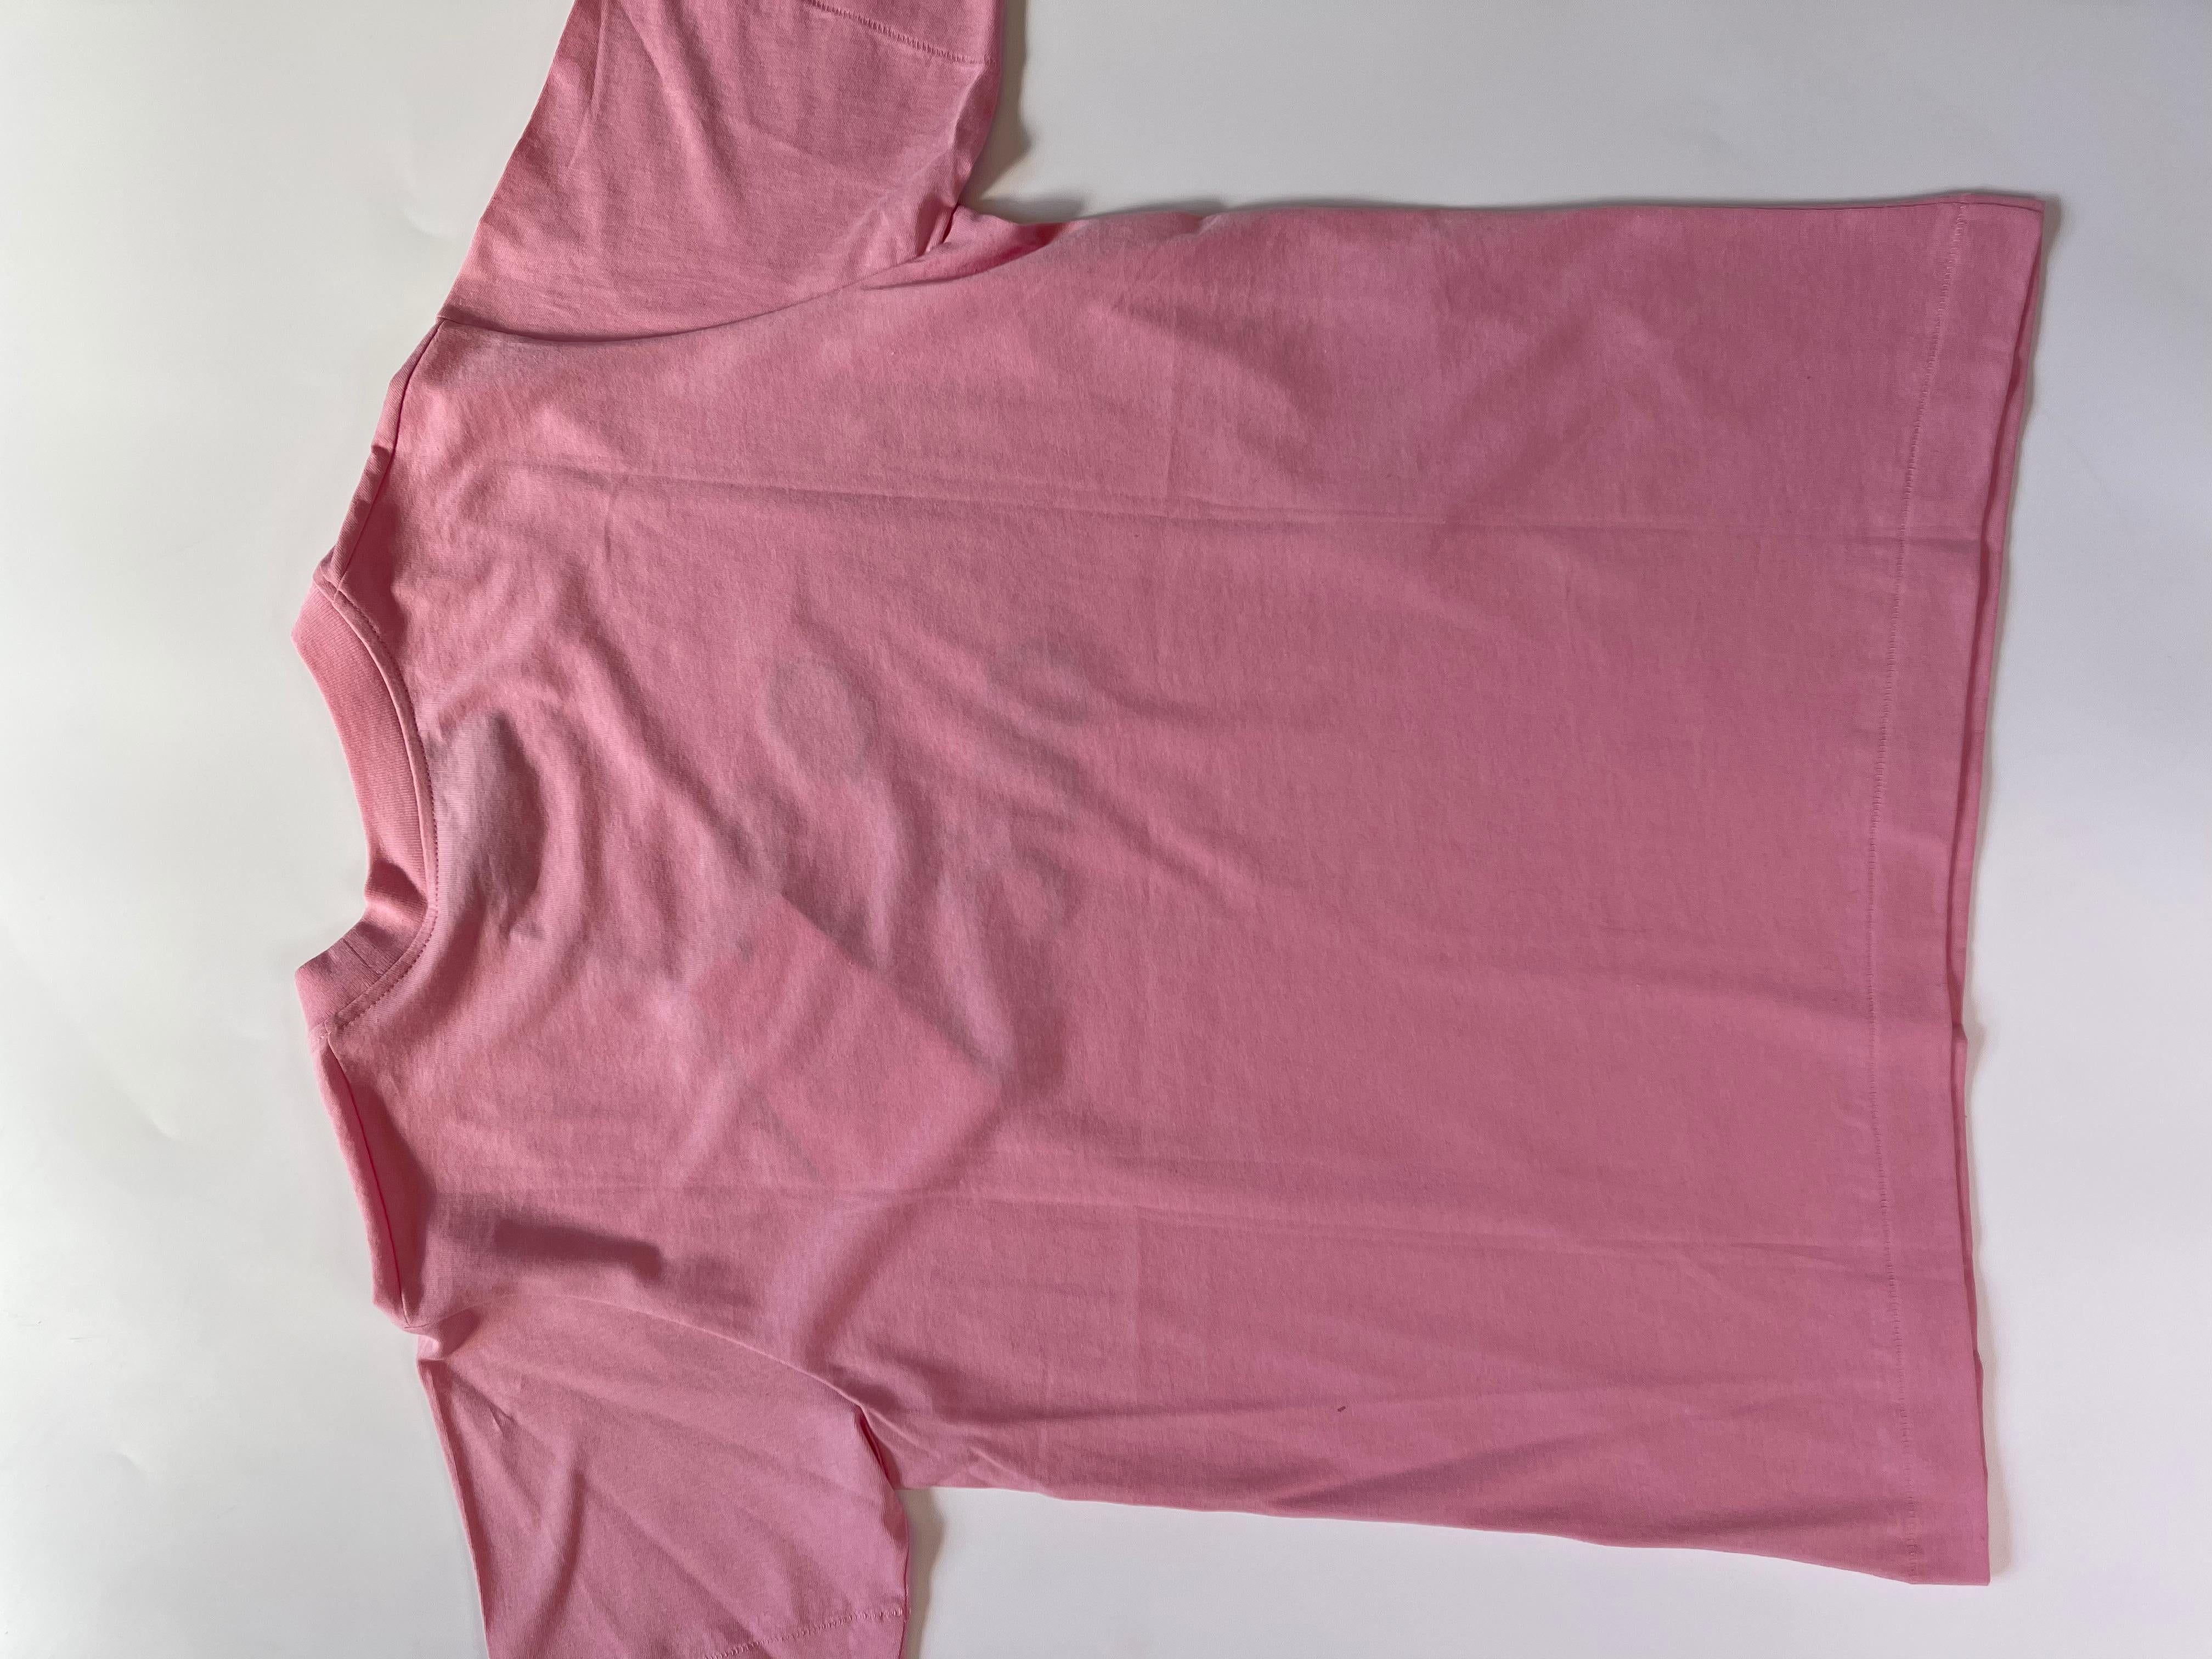 Gucci GG Tennis Sugar Pink Cotton Logo T-Shirt - XS (580762) For 